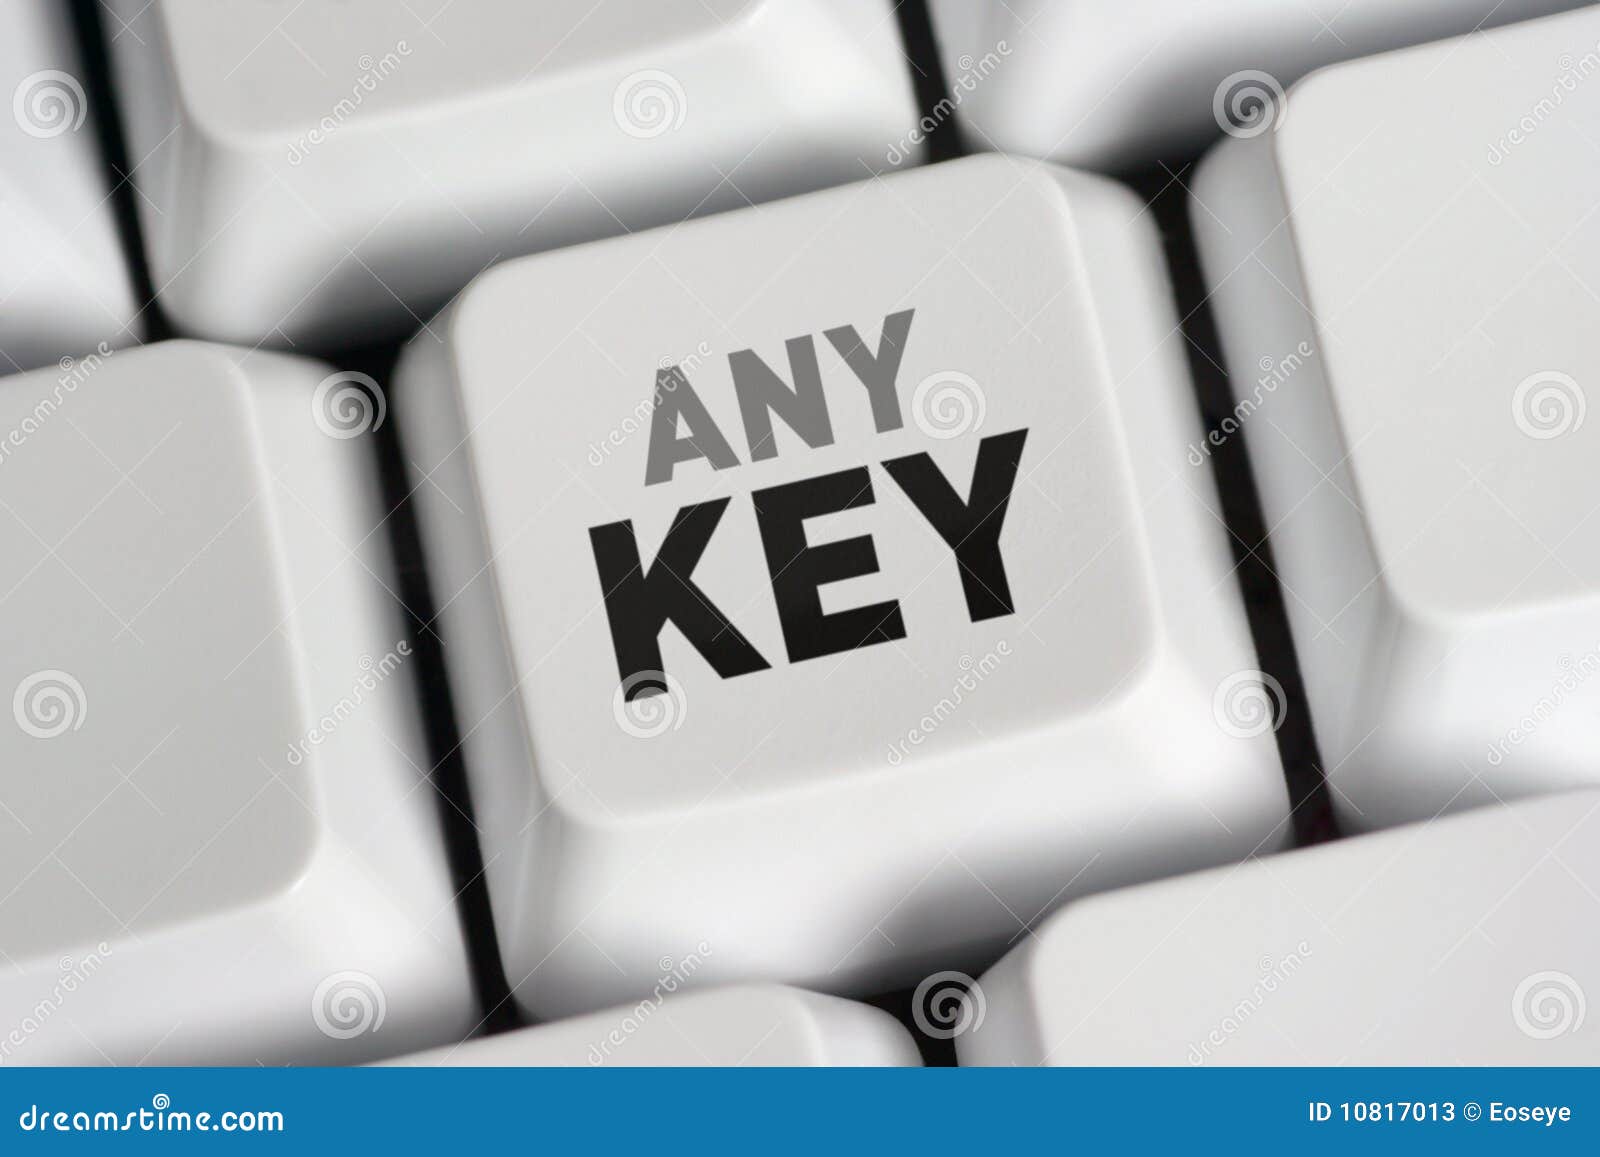 press-any-key-10817013.jpg